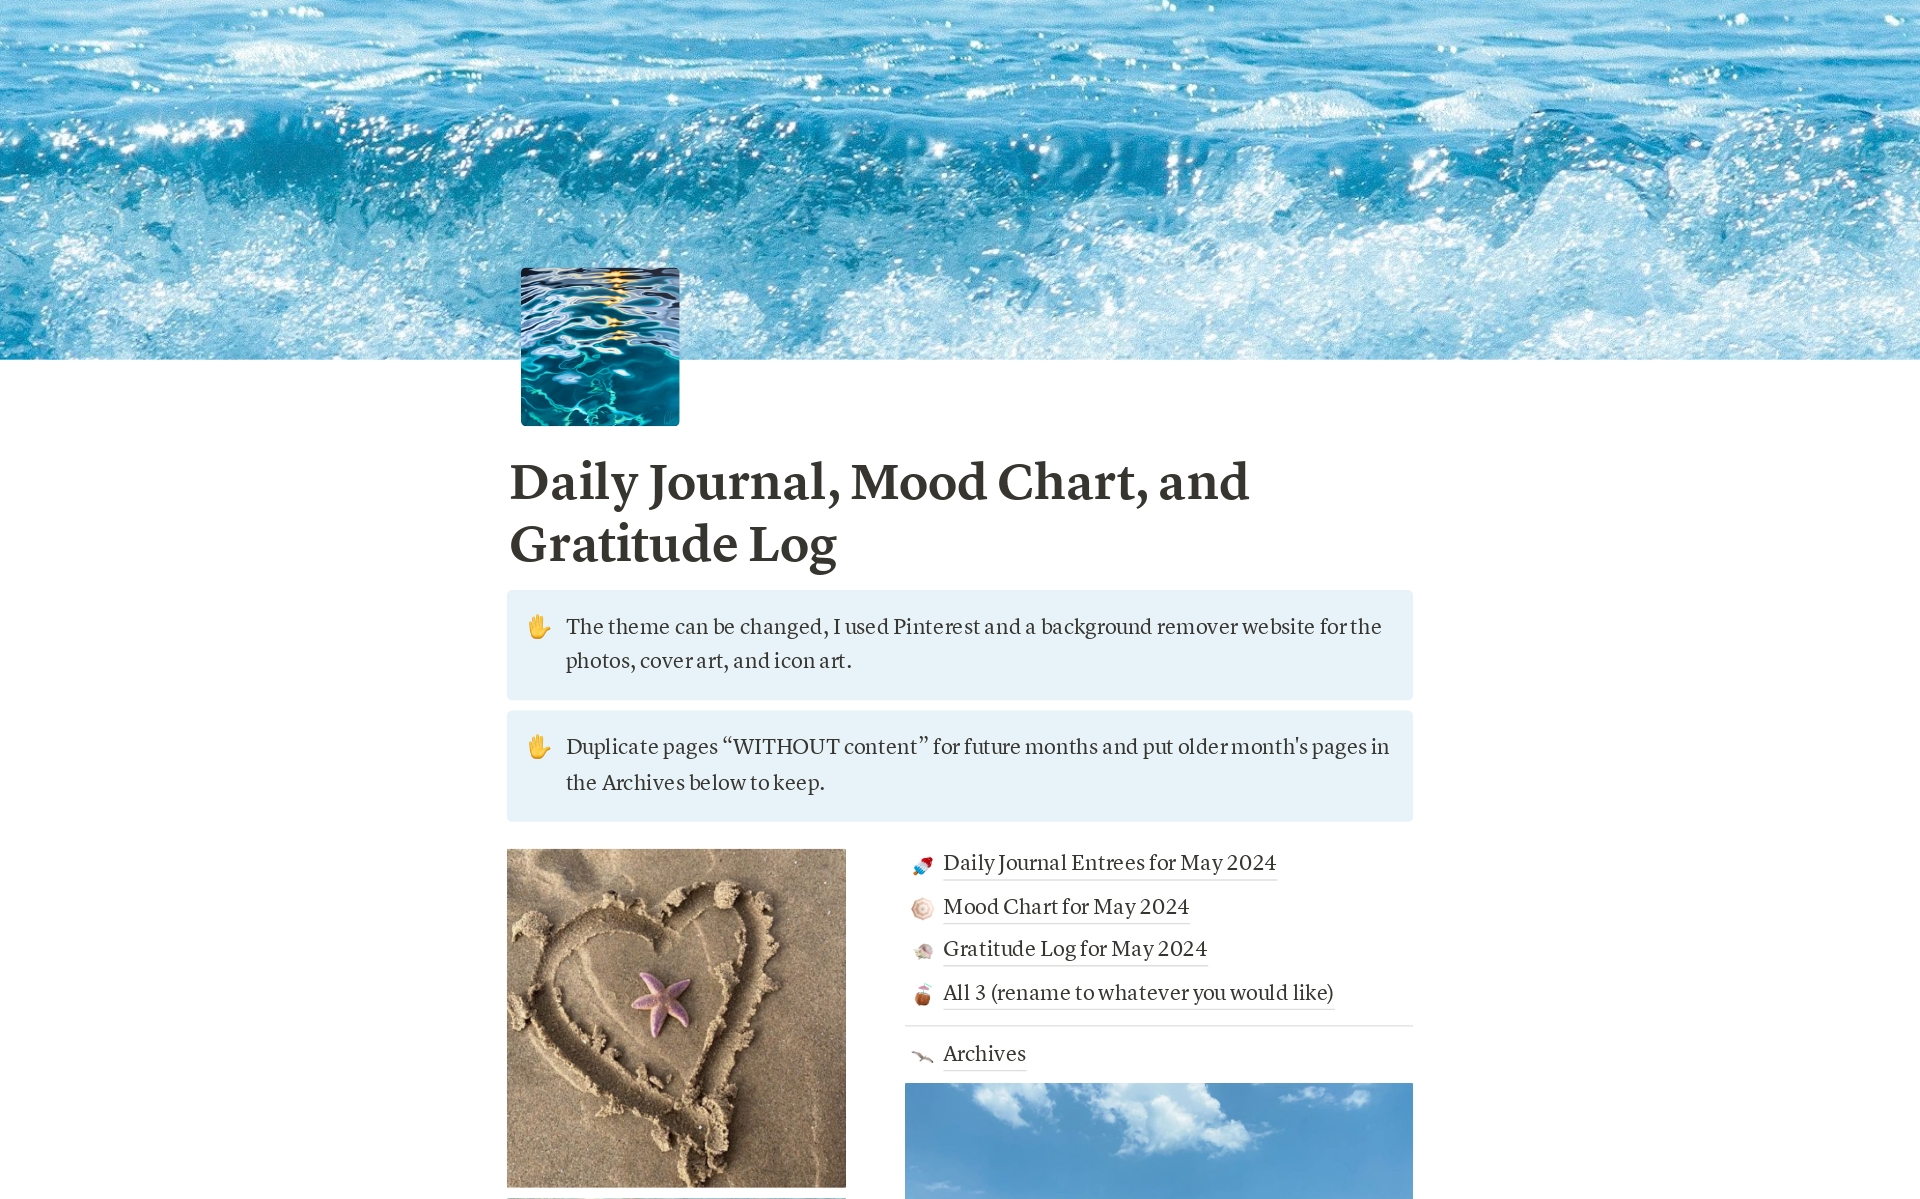 Aperçu du modèle de Daily Journal, Mood Chart, and Gratitude Log